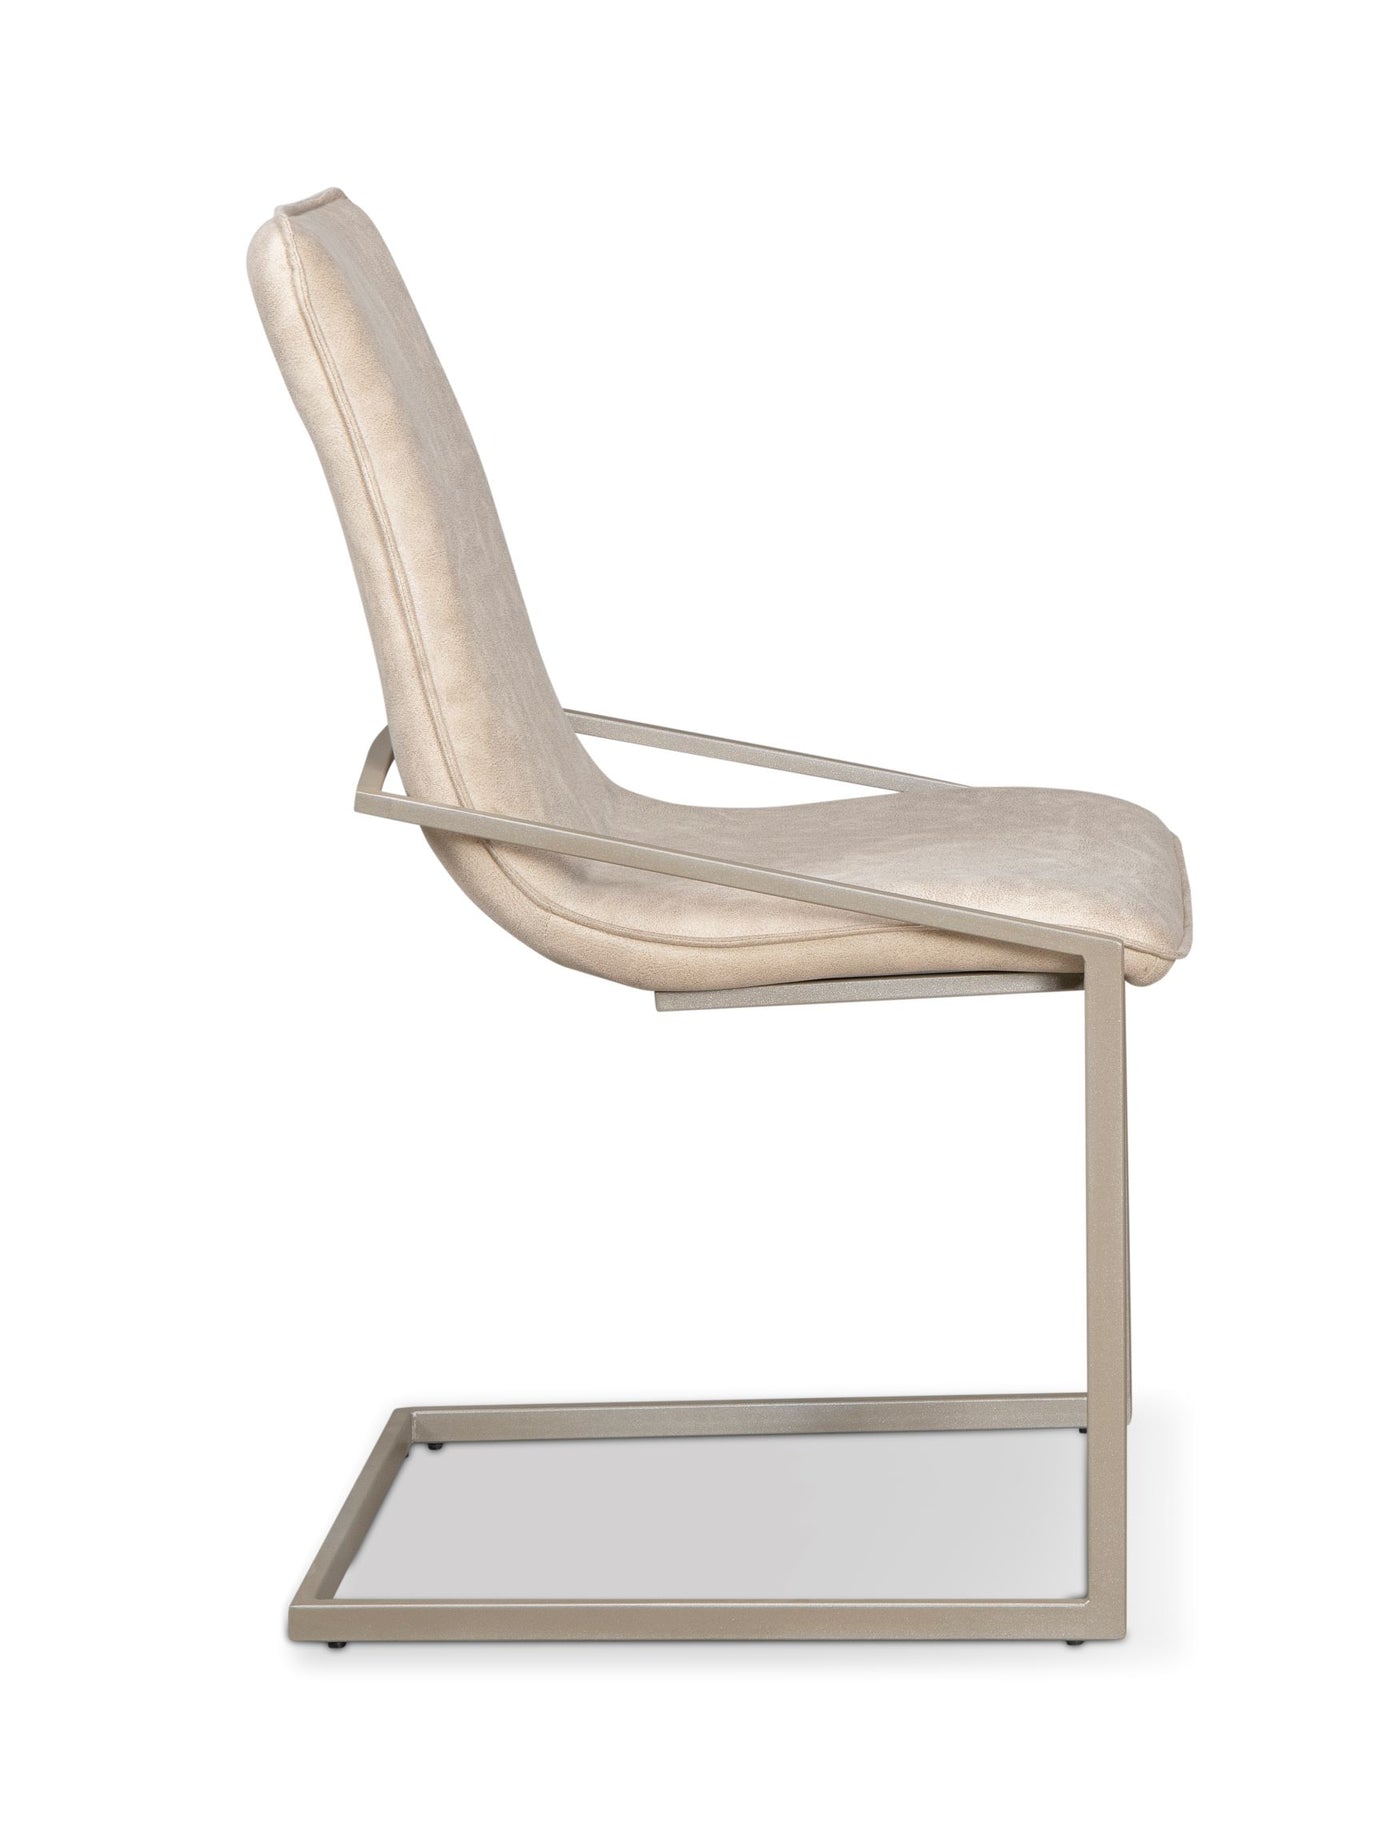 Ophelia Side Chair - Cream